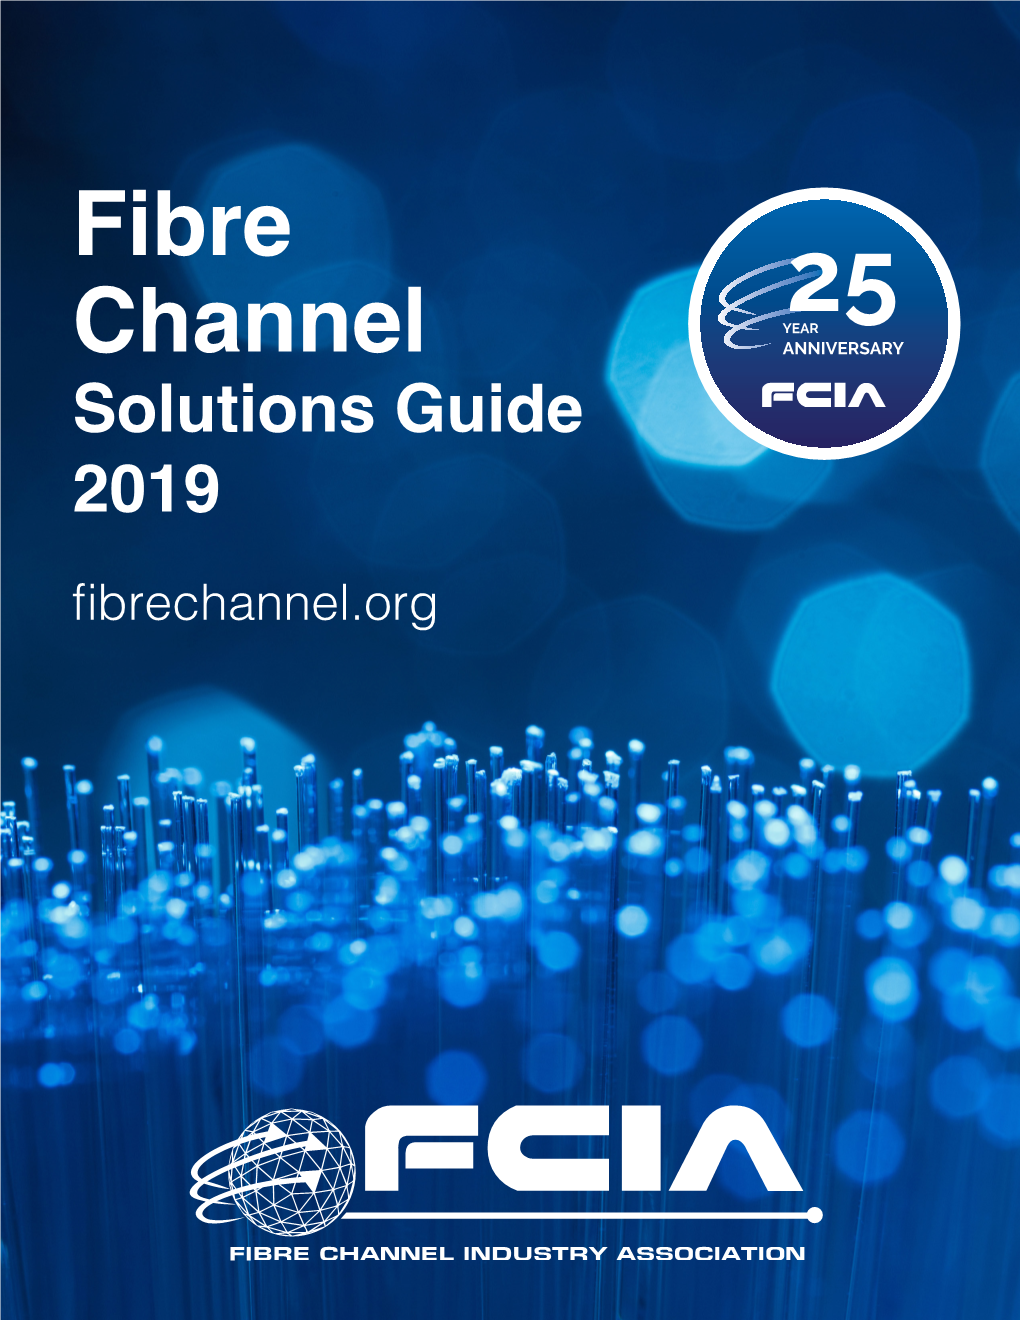 Fibre Channel Solution Guide